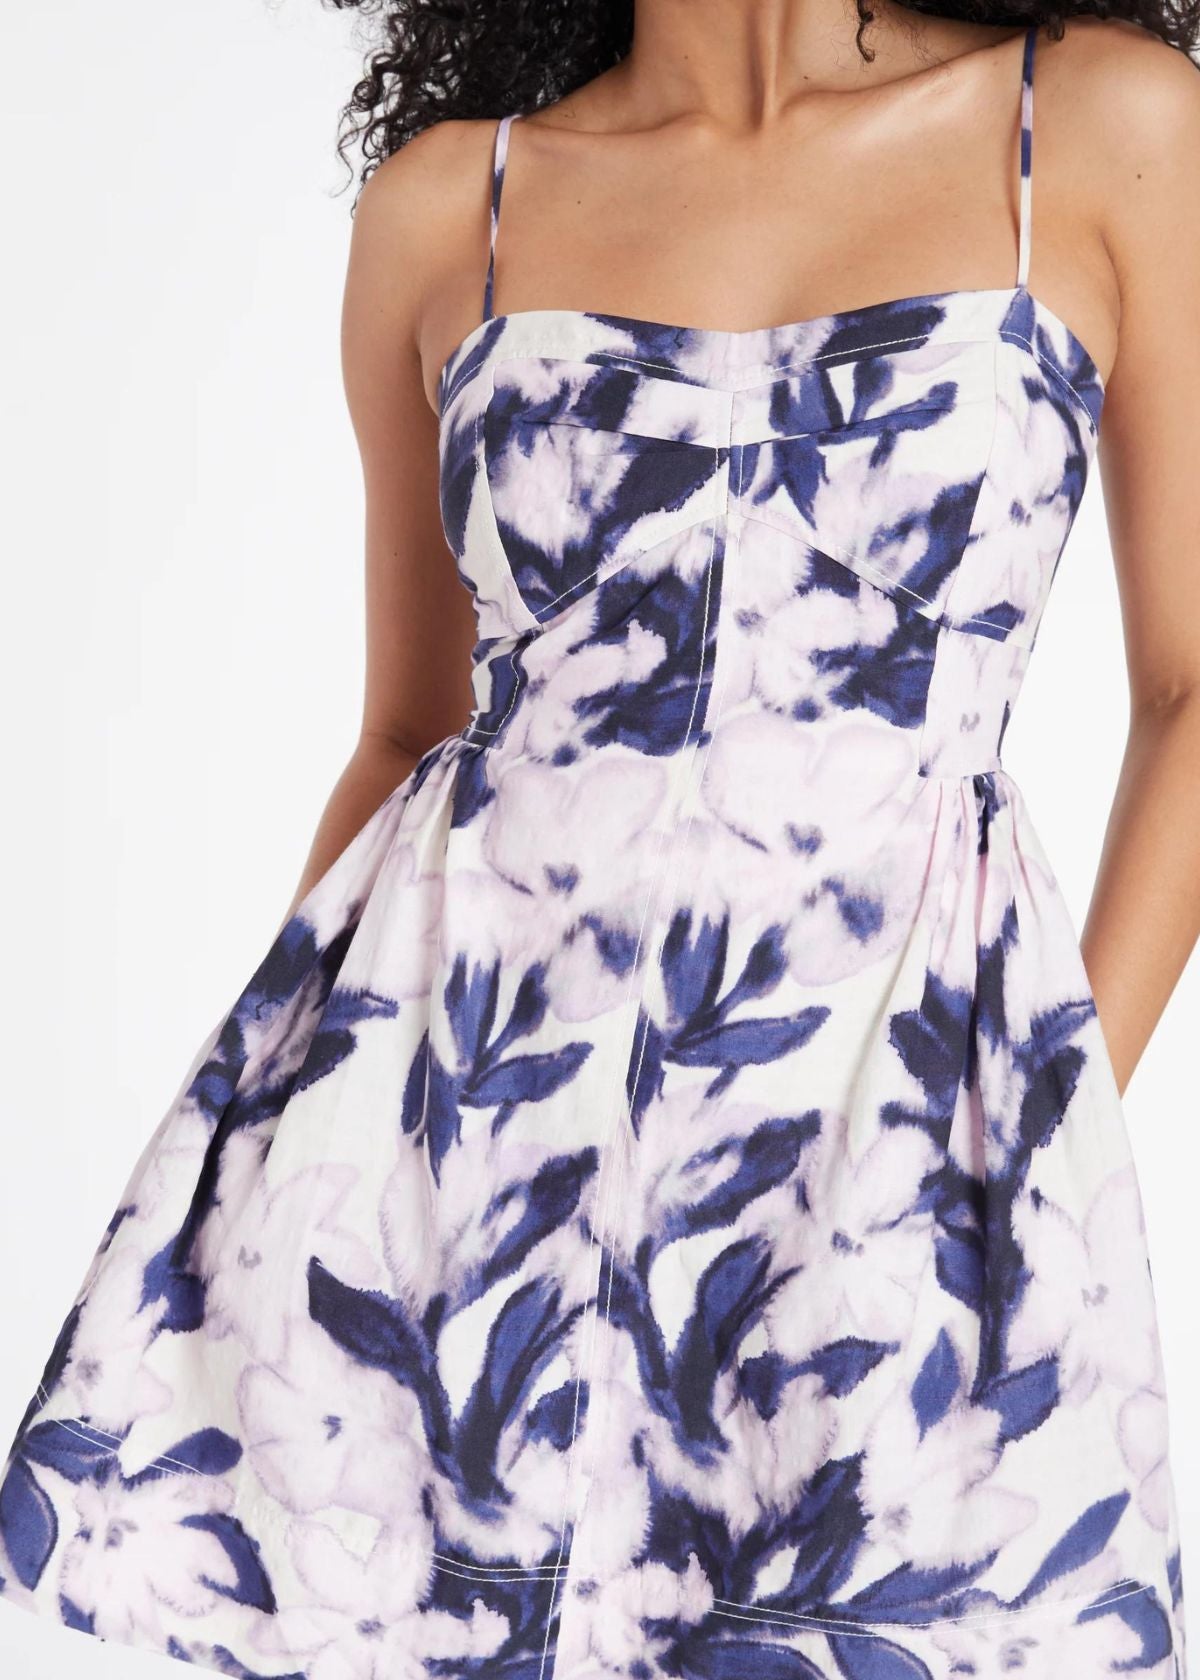 TANYA TAYLOR Gellar Dress - Lilac Off White Multi